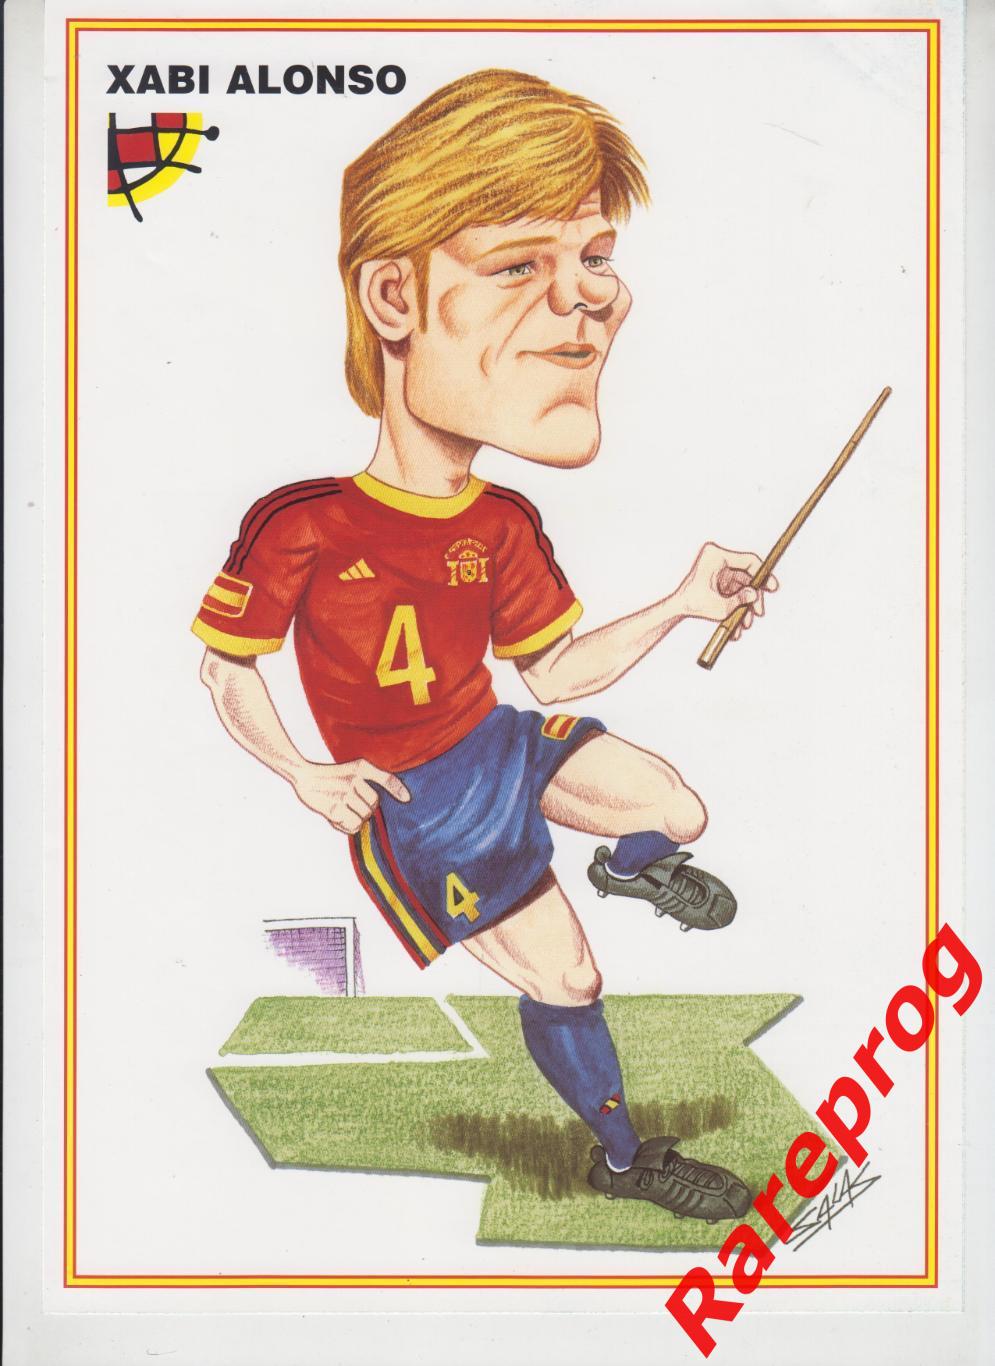 журнал Футбол RFEF Испания № 52 май 2003 - постер Xabi Alonso 1